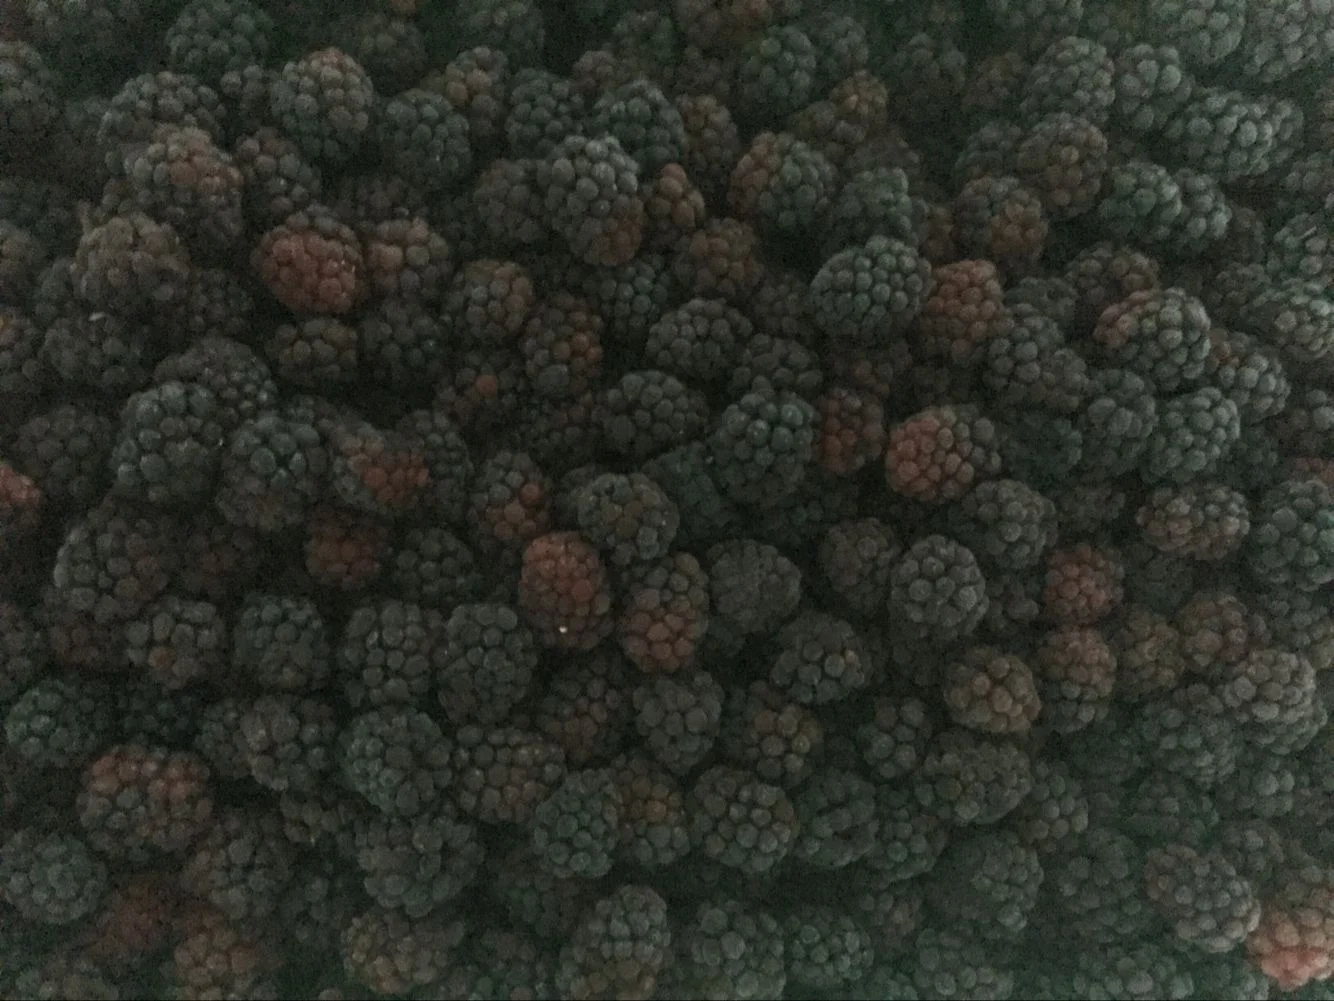 Grade A blackberry